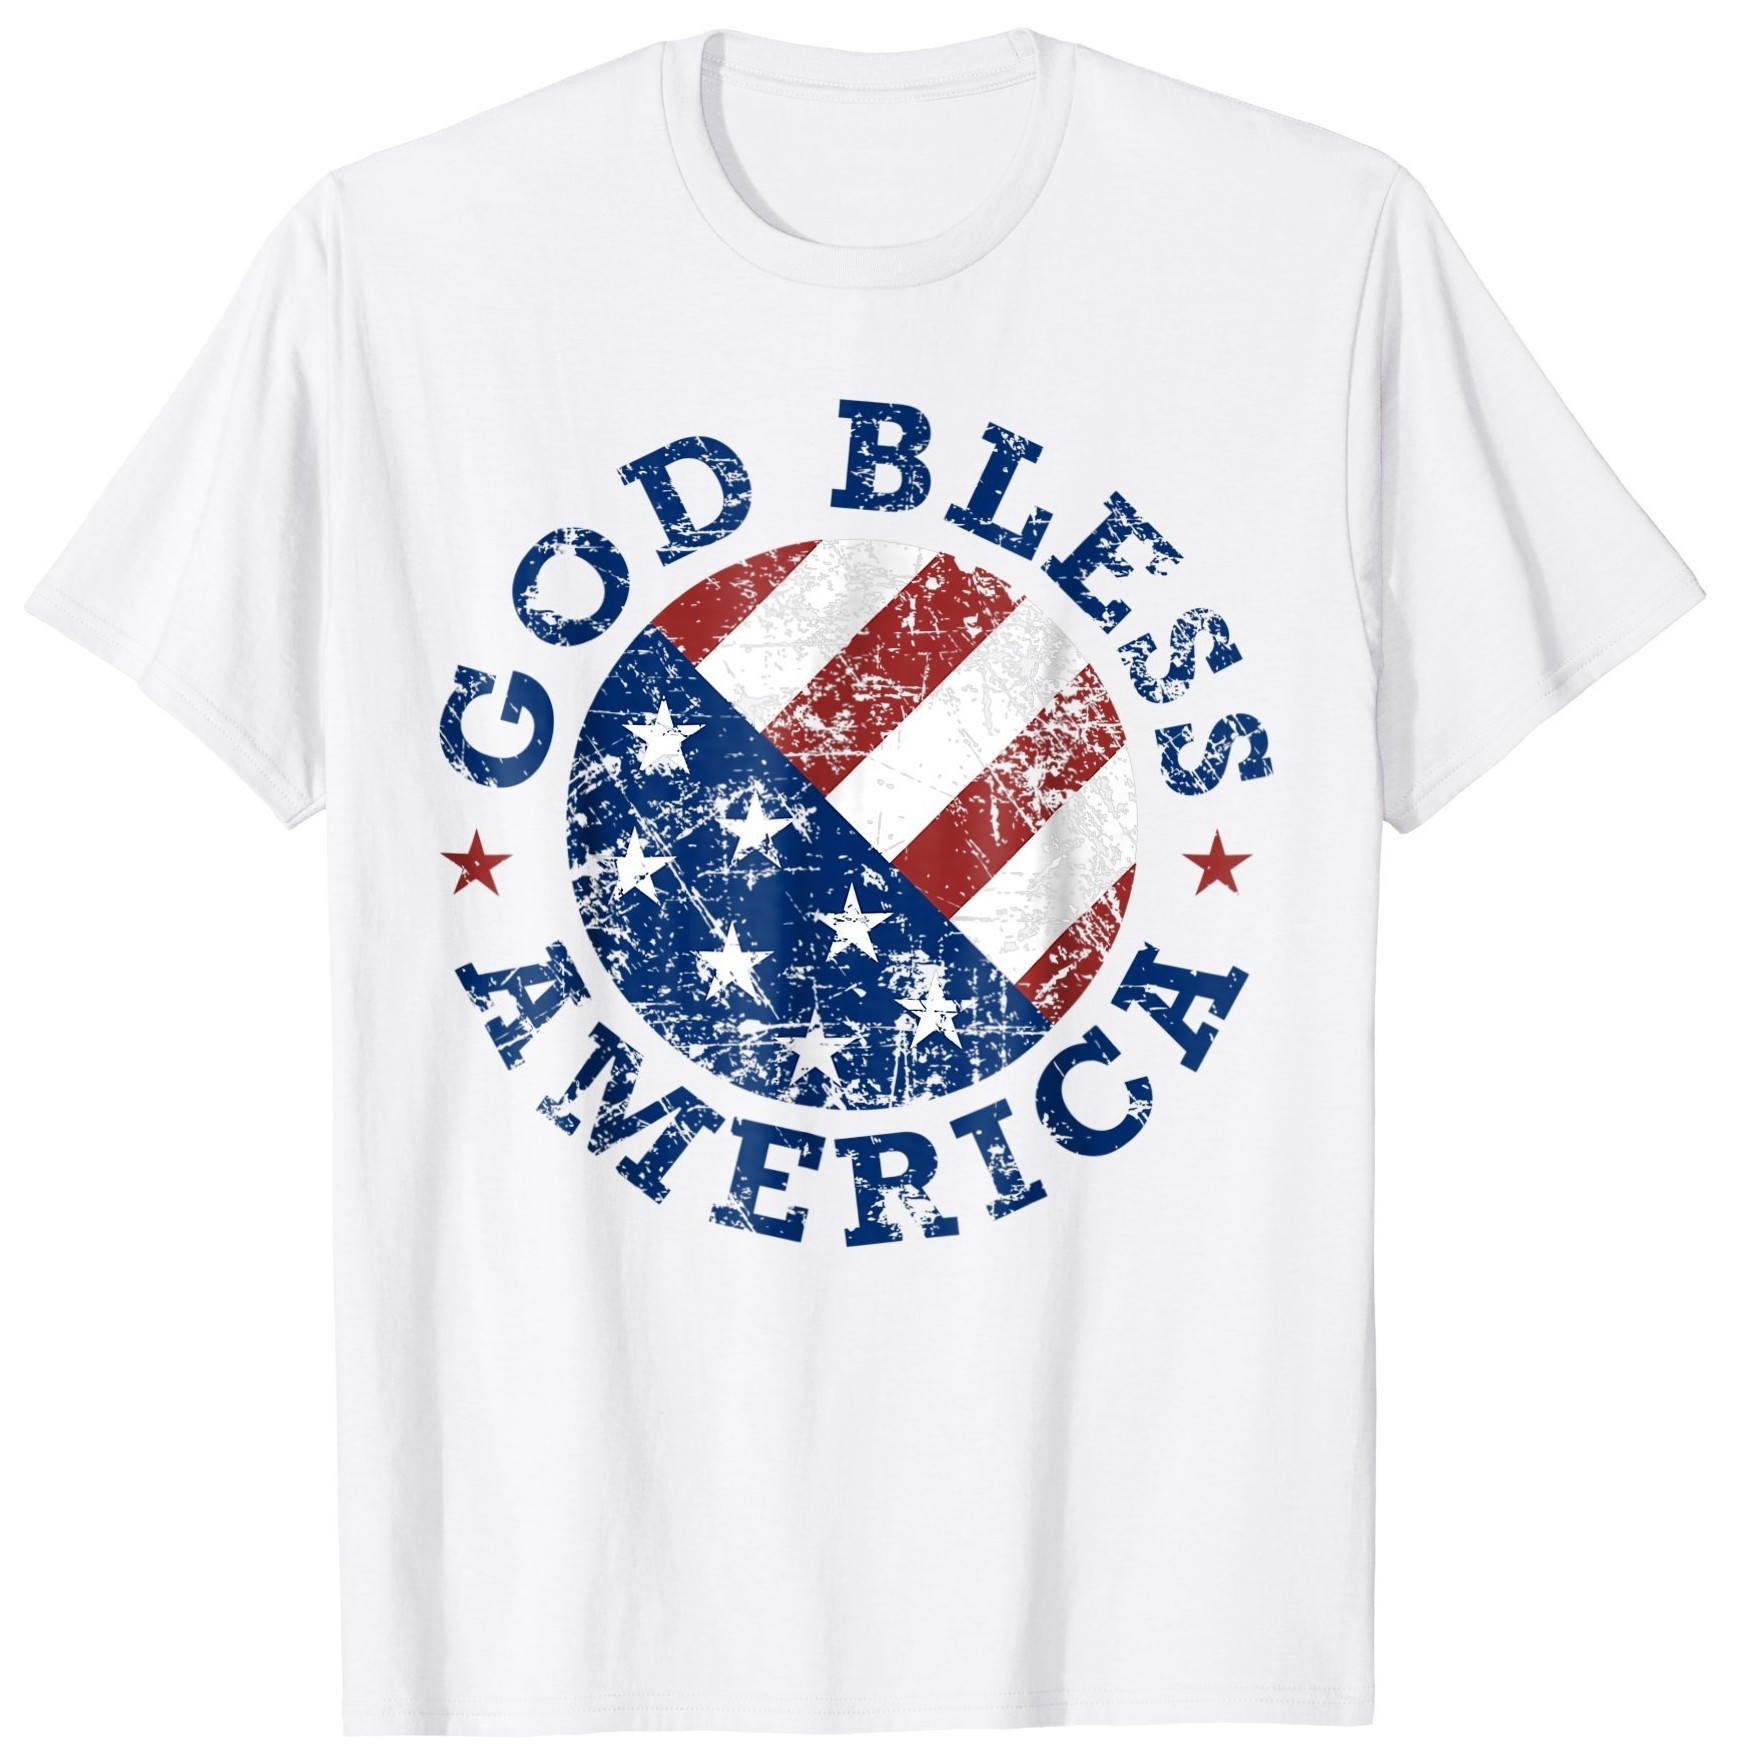 Buy > god save america t shirt > in stock